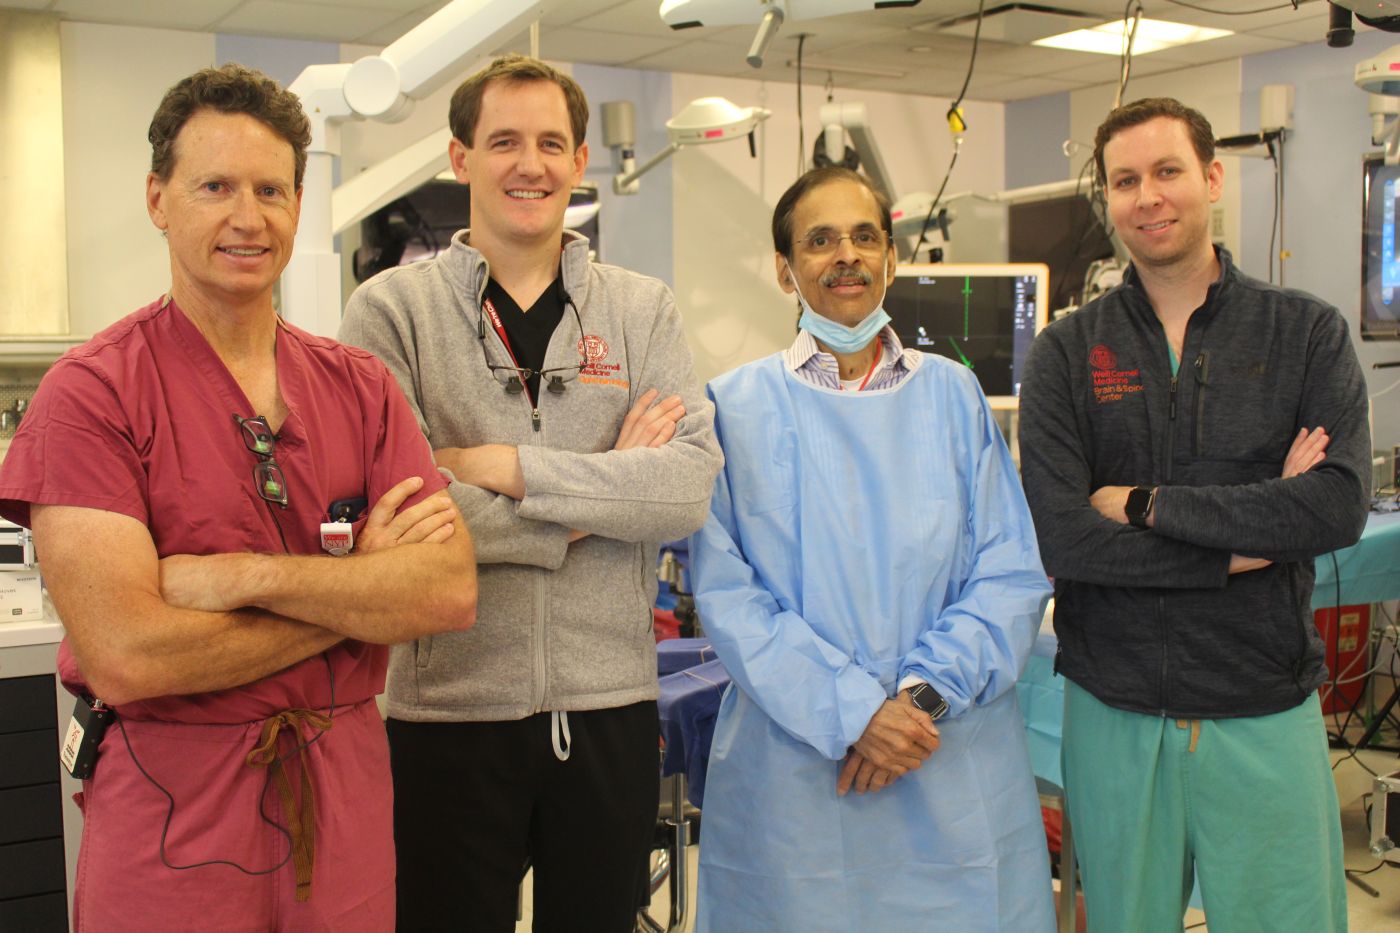 Theodore Schwartz, MD, Kyle J. Godfrey, MD, FACS, Vijay K. Anand, MD, and Evan Bander, MD